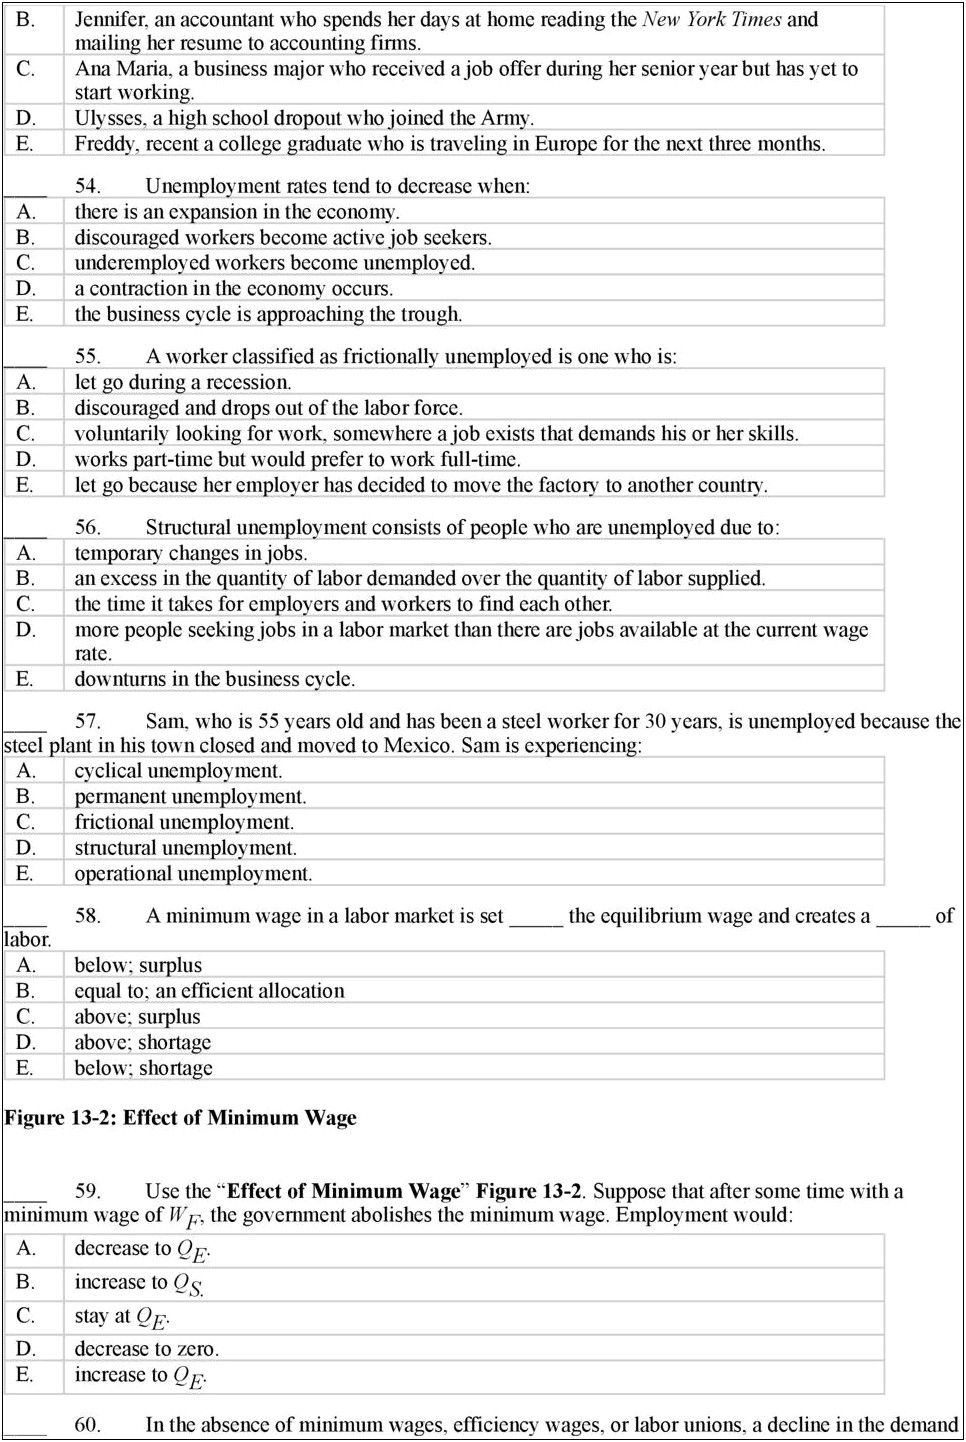 Skills For Minimum Wage Jobs Resume